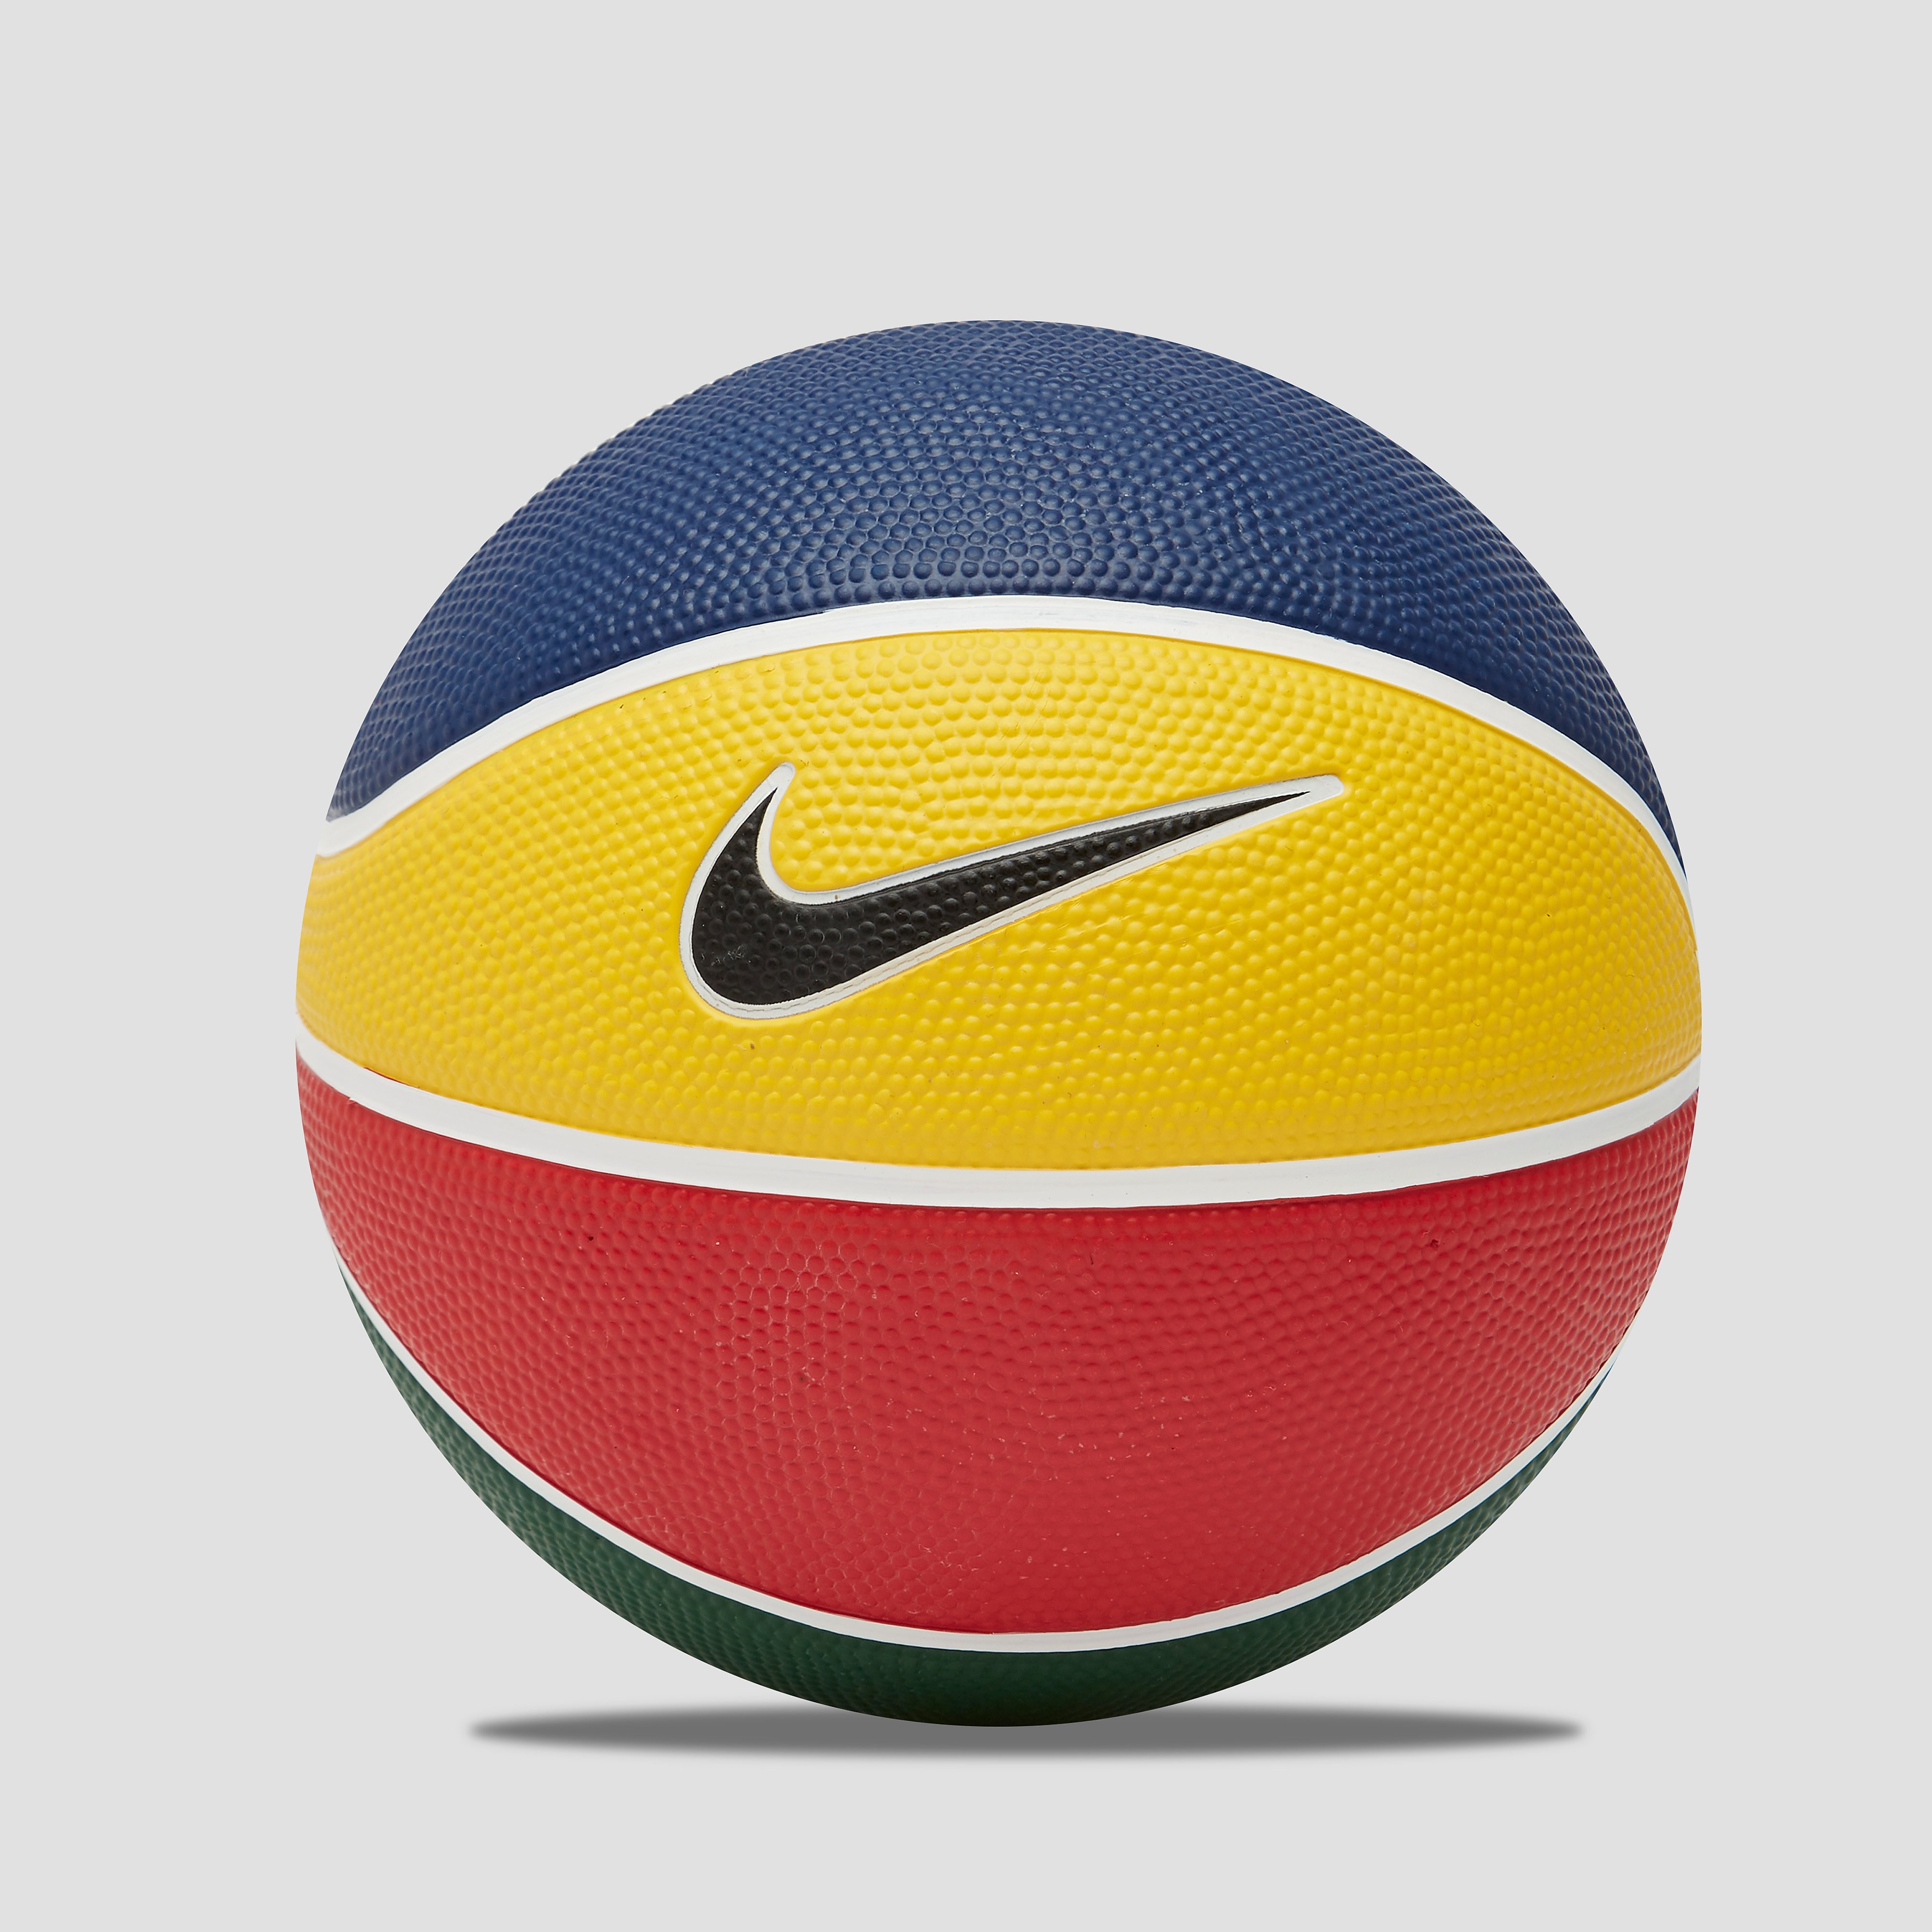 Nike skills basketbal